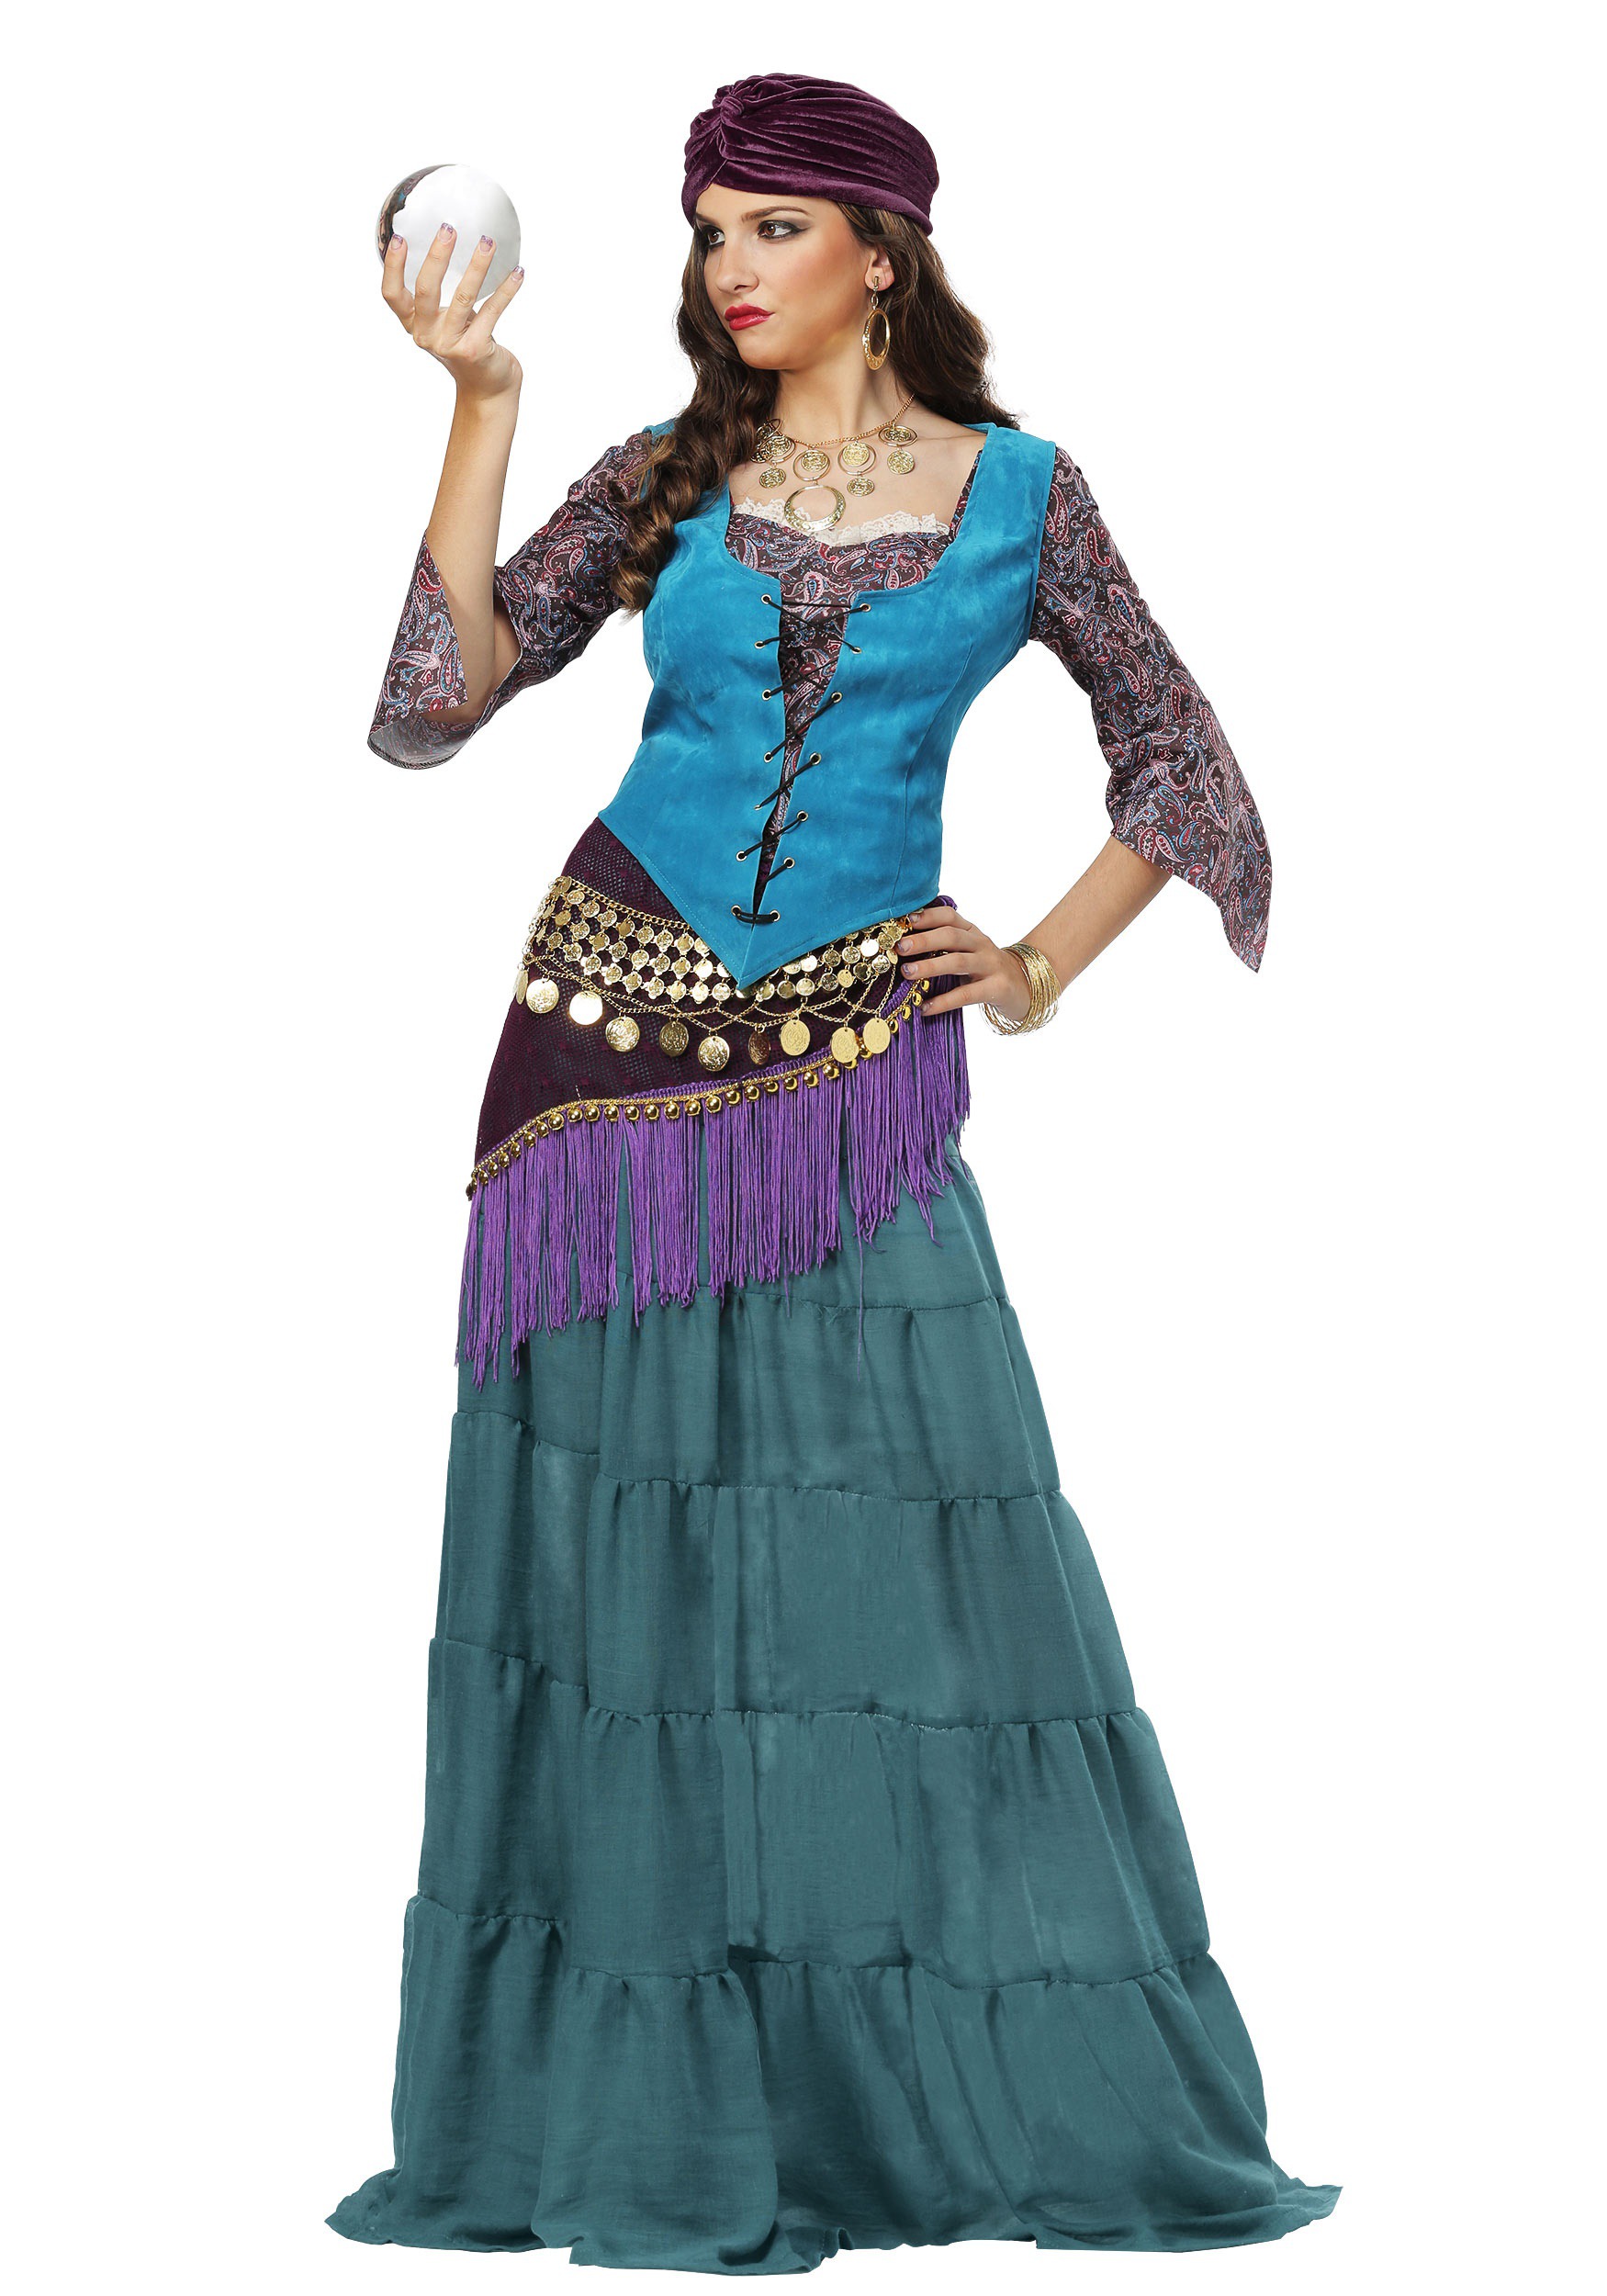 gypsy dress up ideas